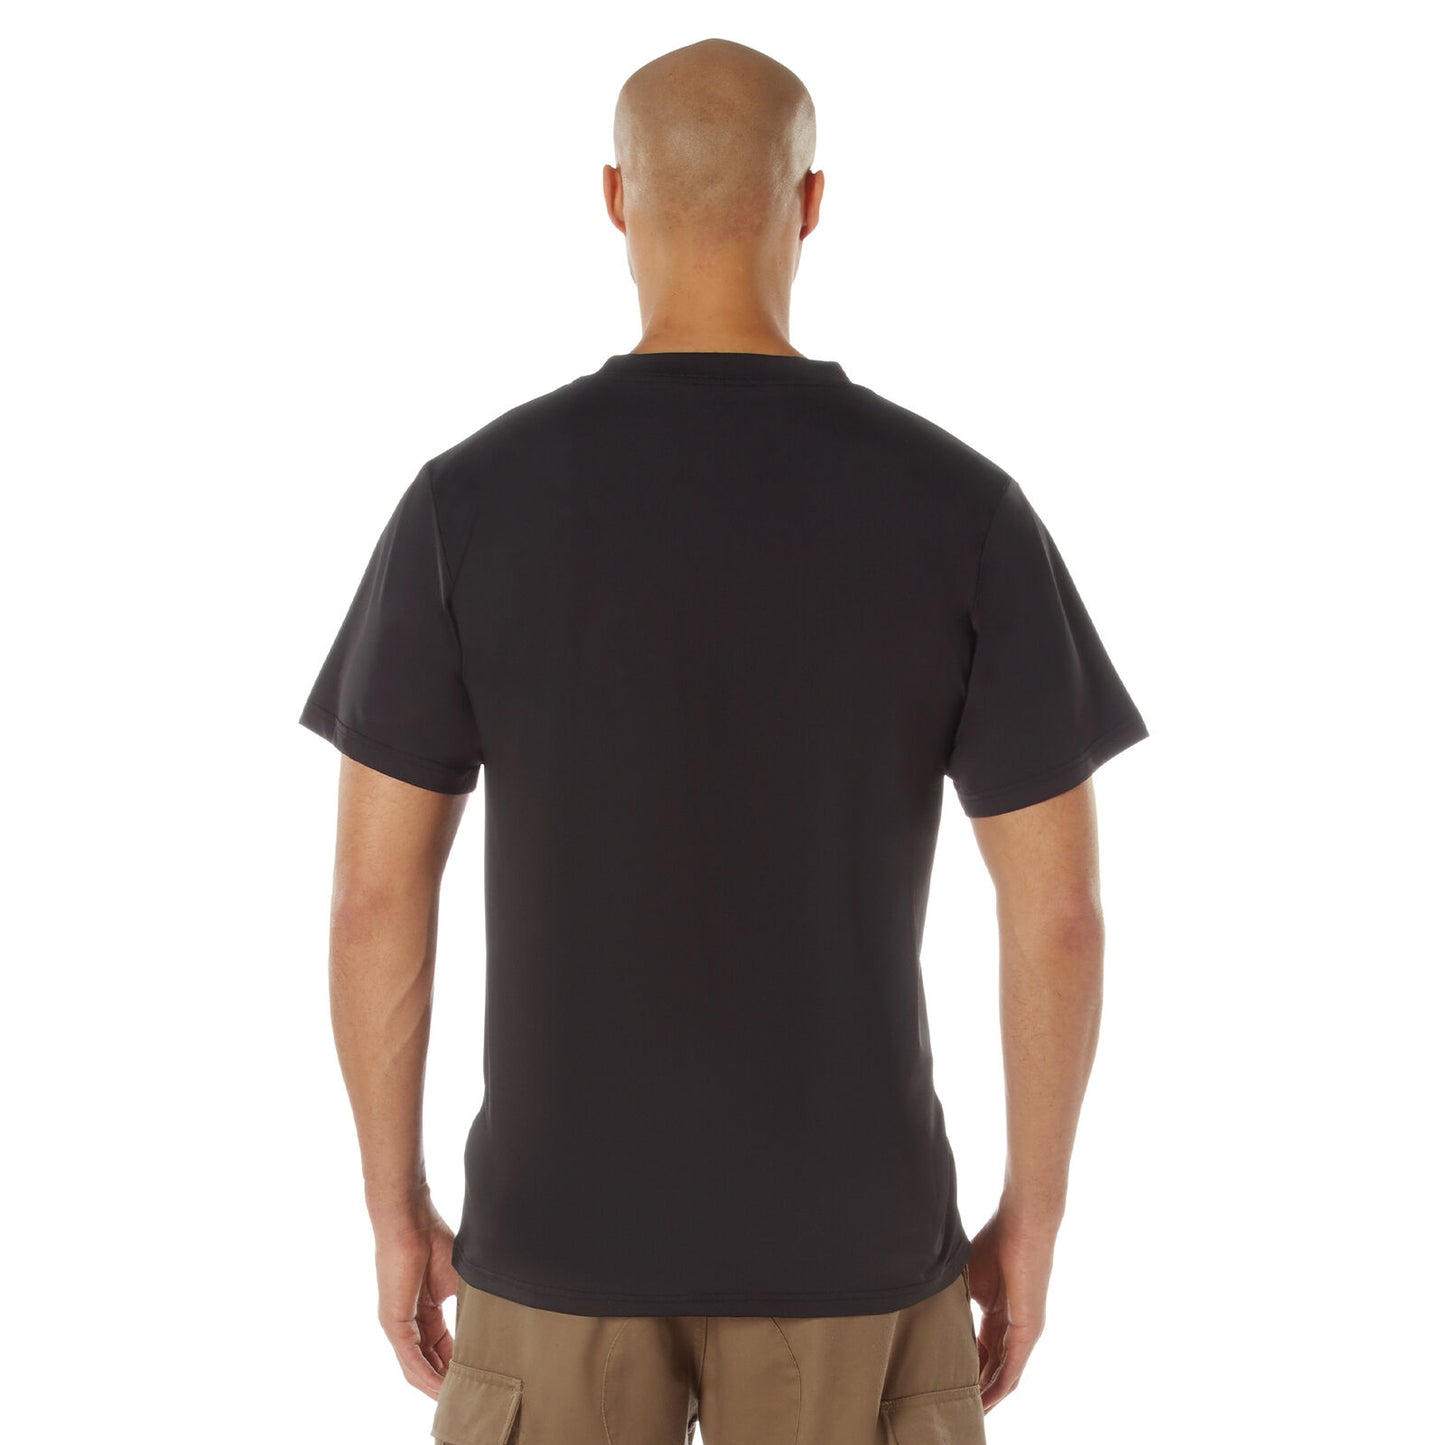 Men's Black Physical Training T-Shirt- Moisture Wicking Spandex Nylon Fabric